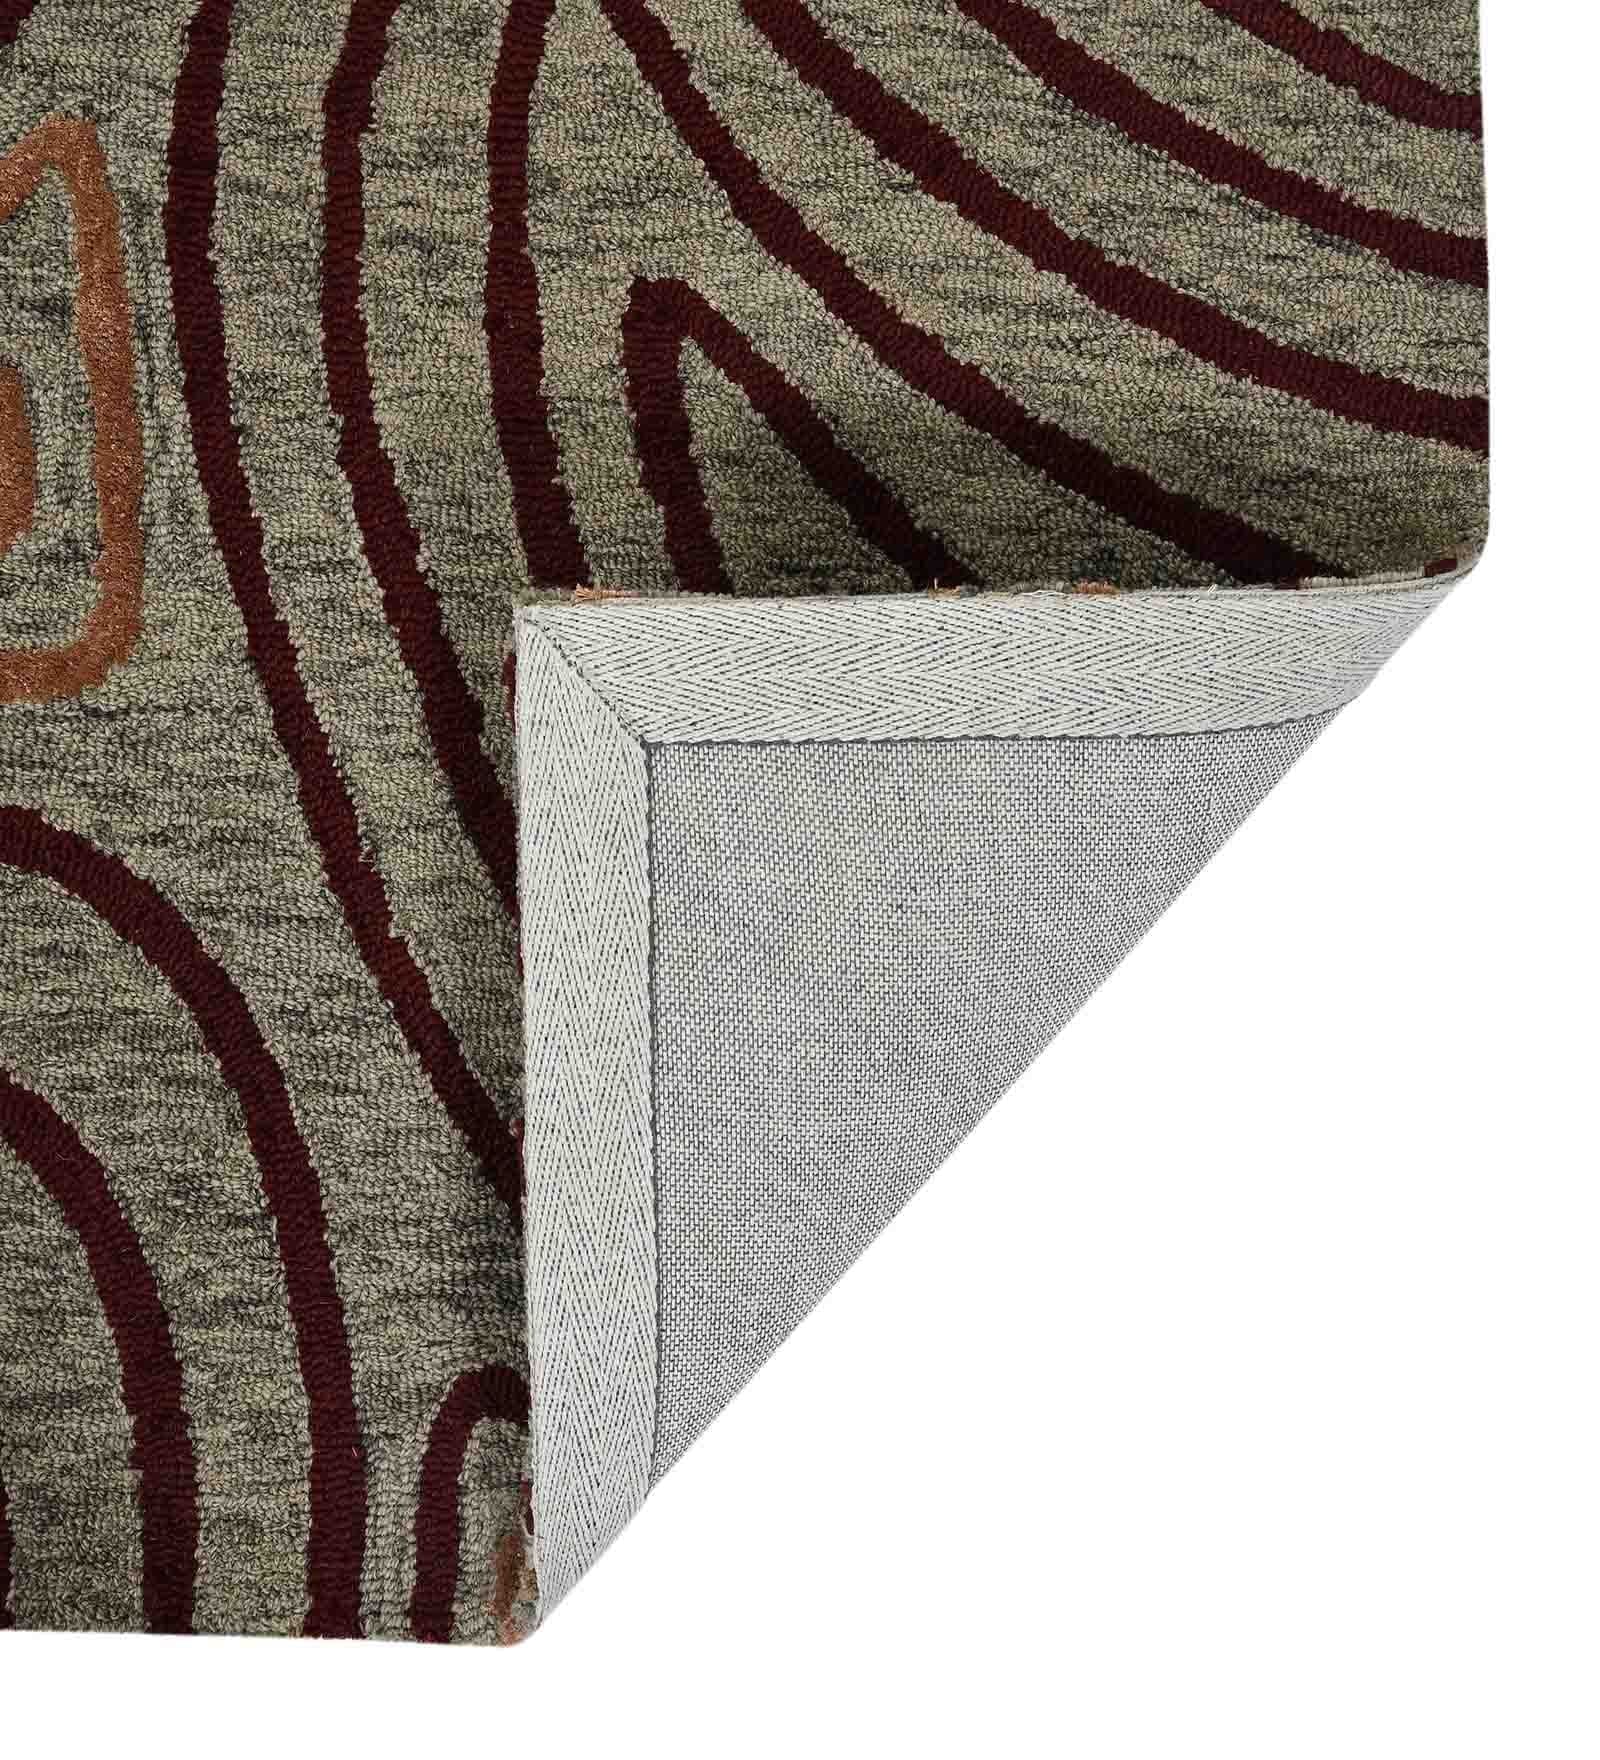 KHAKI Wool & Viscose Canyan 5x8 Feet  Hand-Tufted Carpet - Rug